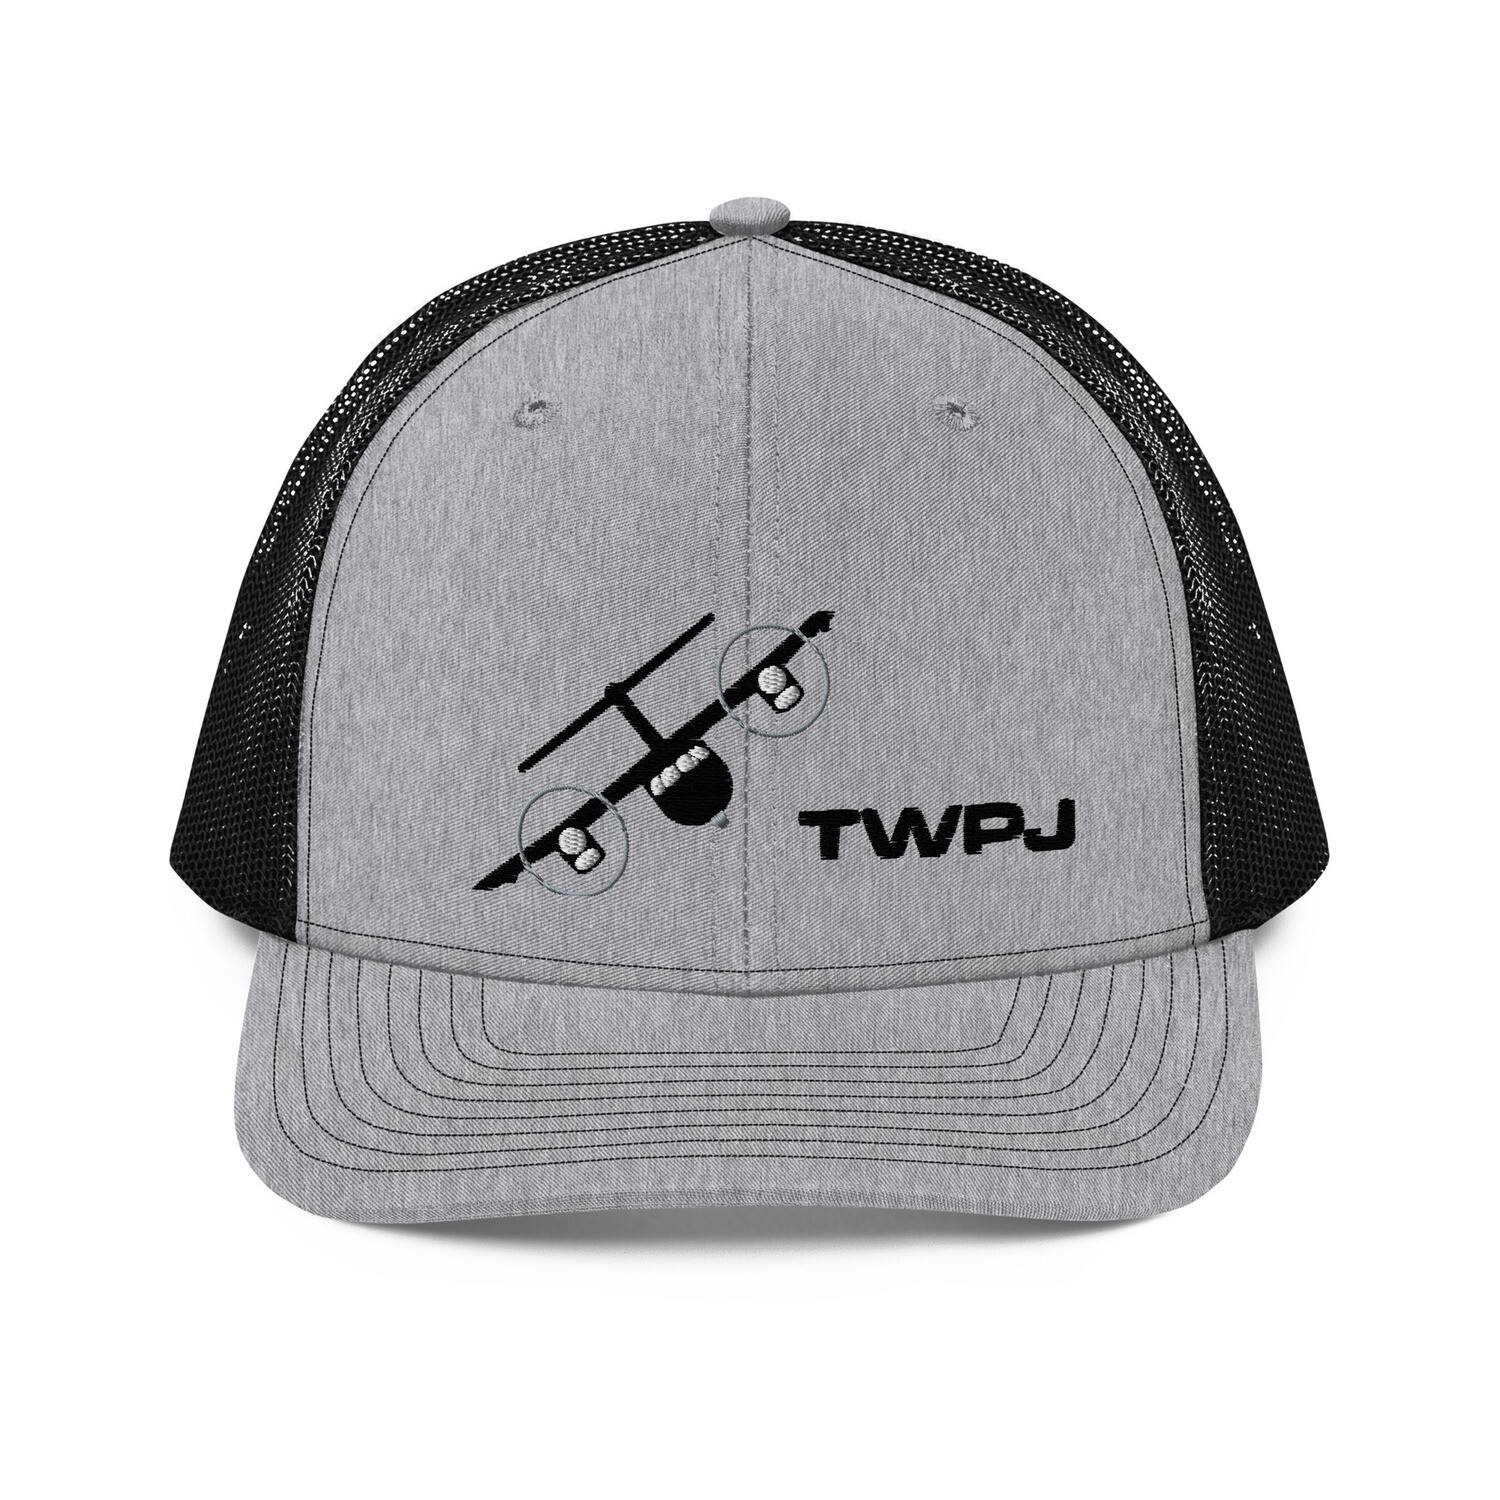 TWPJ Trucker Cap